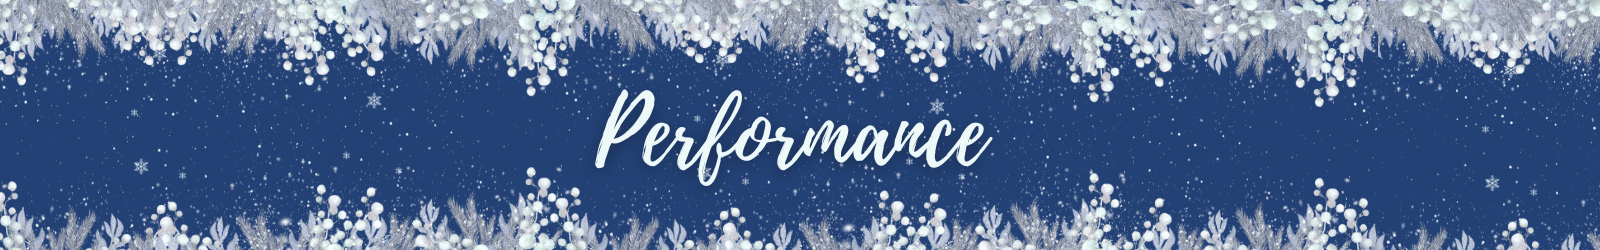 Performance -December Leadership Development Carnival Divider